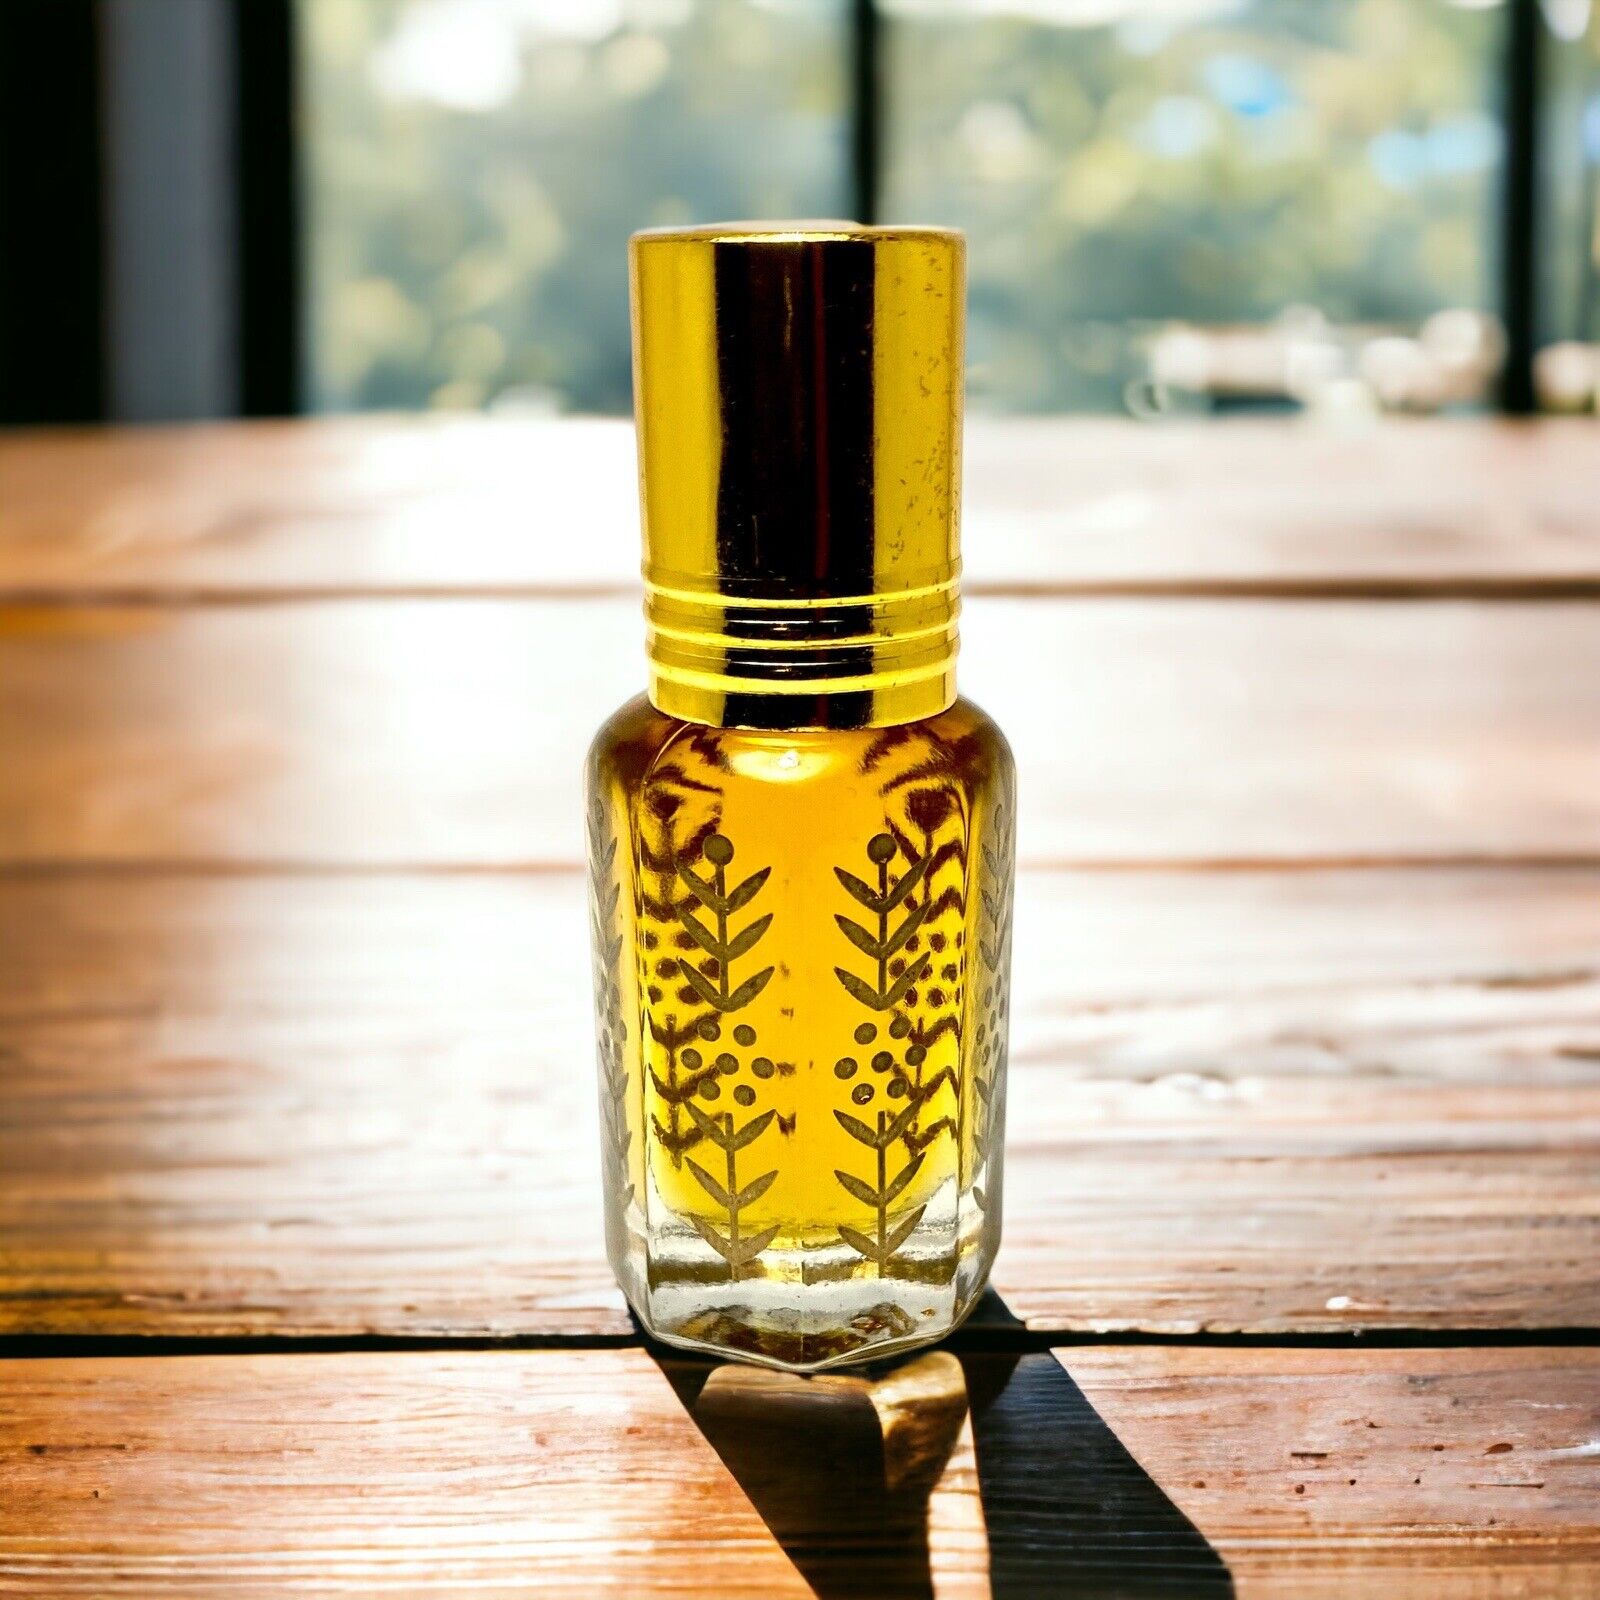 The Pardon. Concentrated Attar Perfume Body Oil Fragrance 6ml Decorative Bottle.